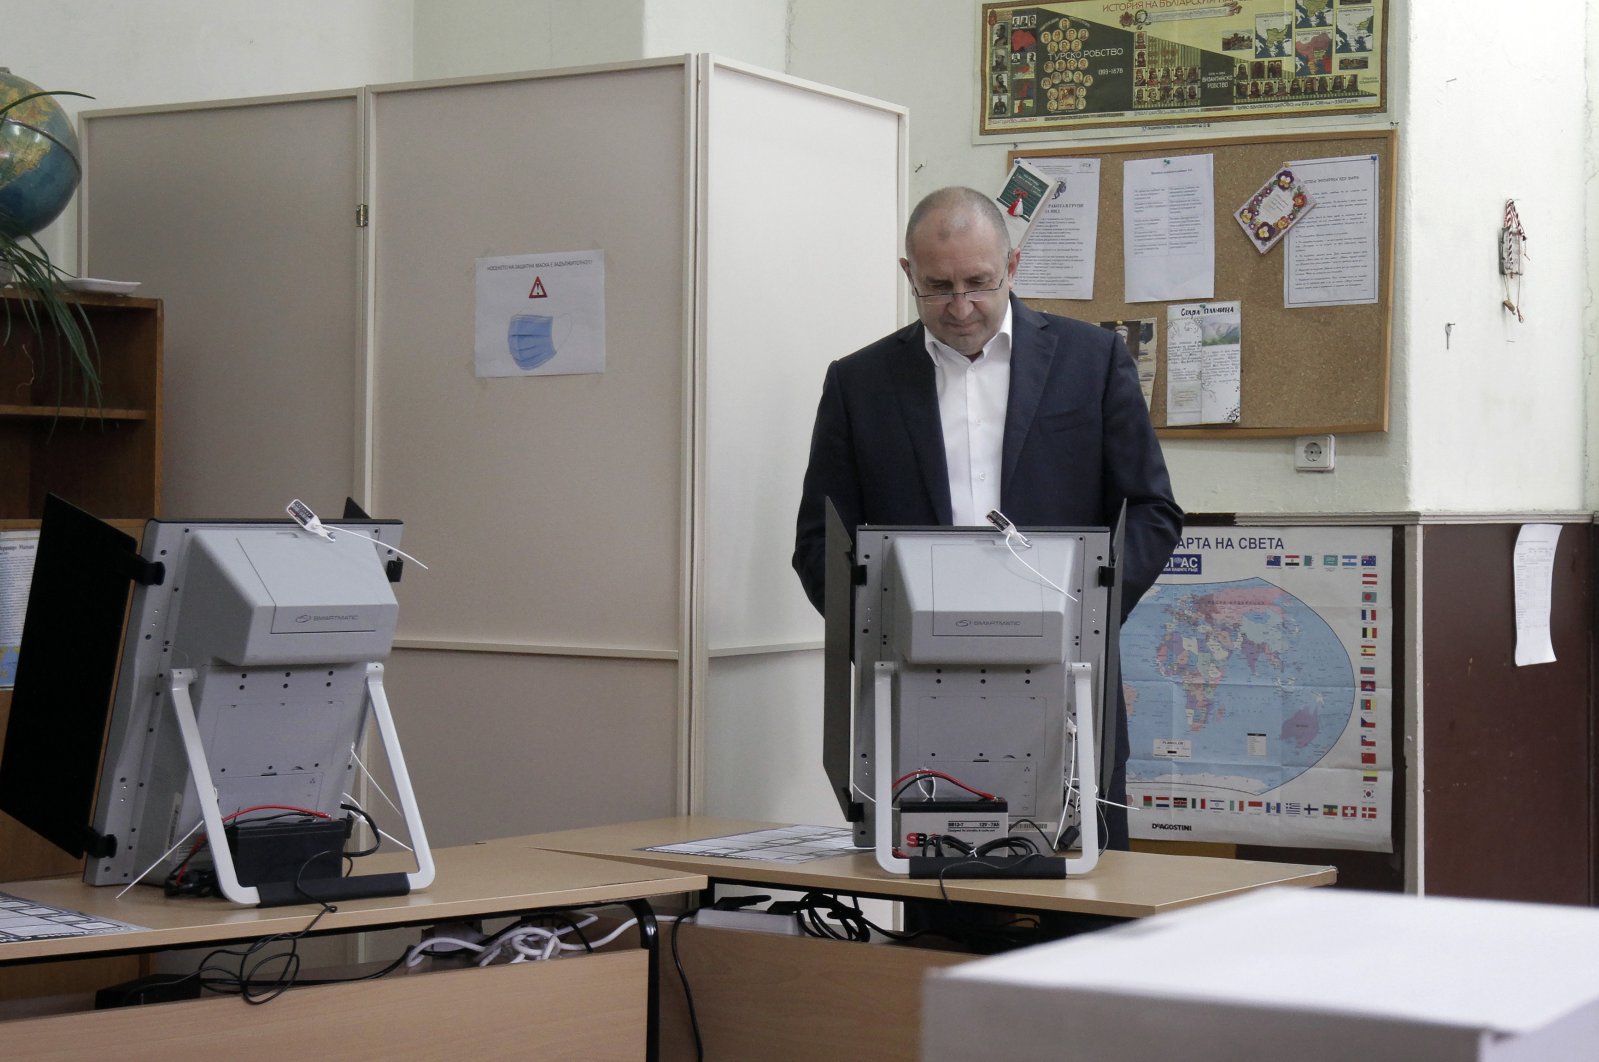 Bulgarian President Rumen Radev votes on a machine at a polling booth in Sofia, Bulgaria, Nov. 21, 2021. (AP Photo)